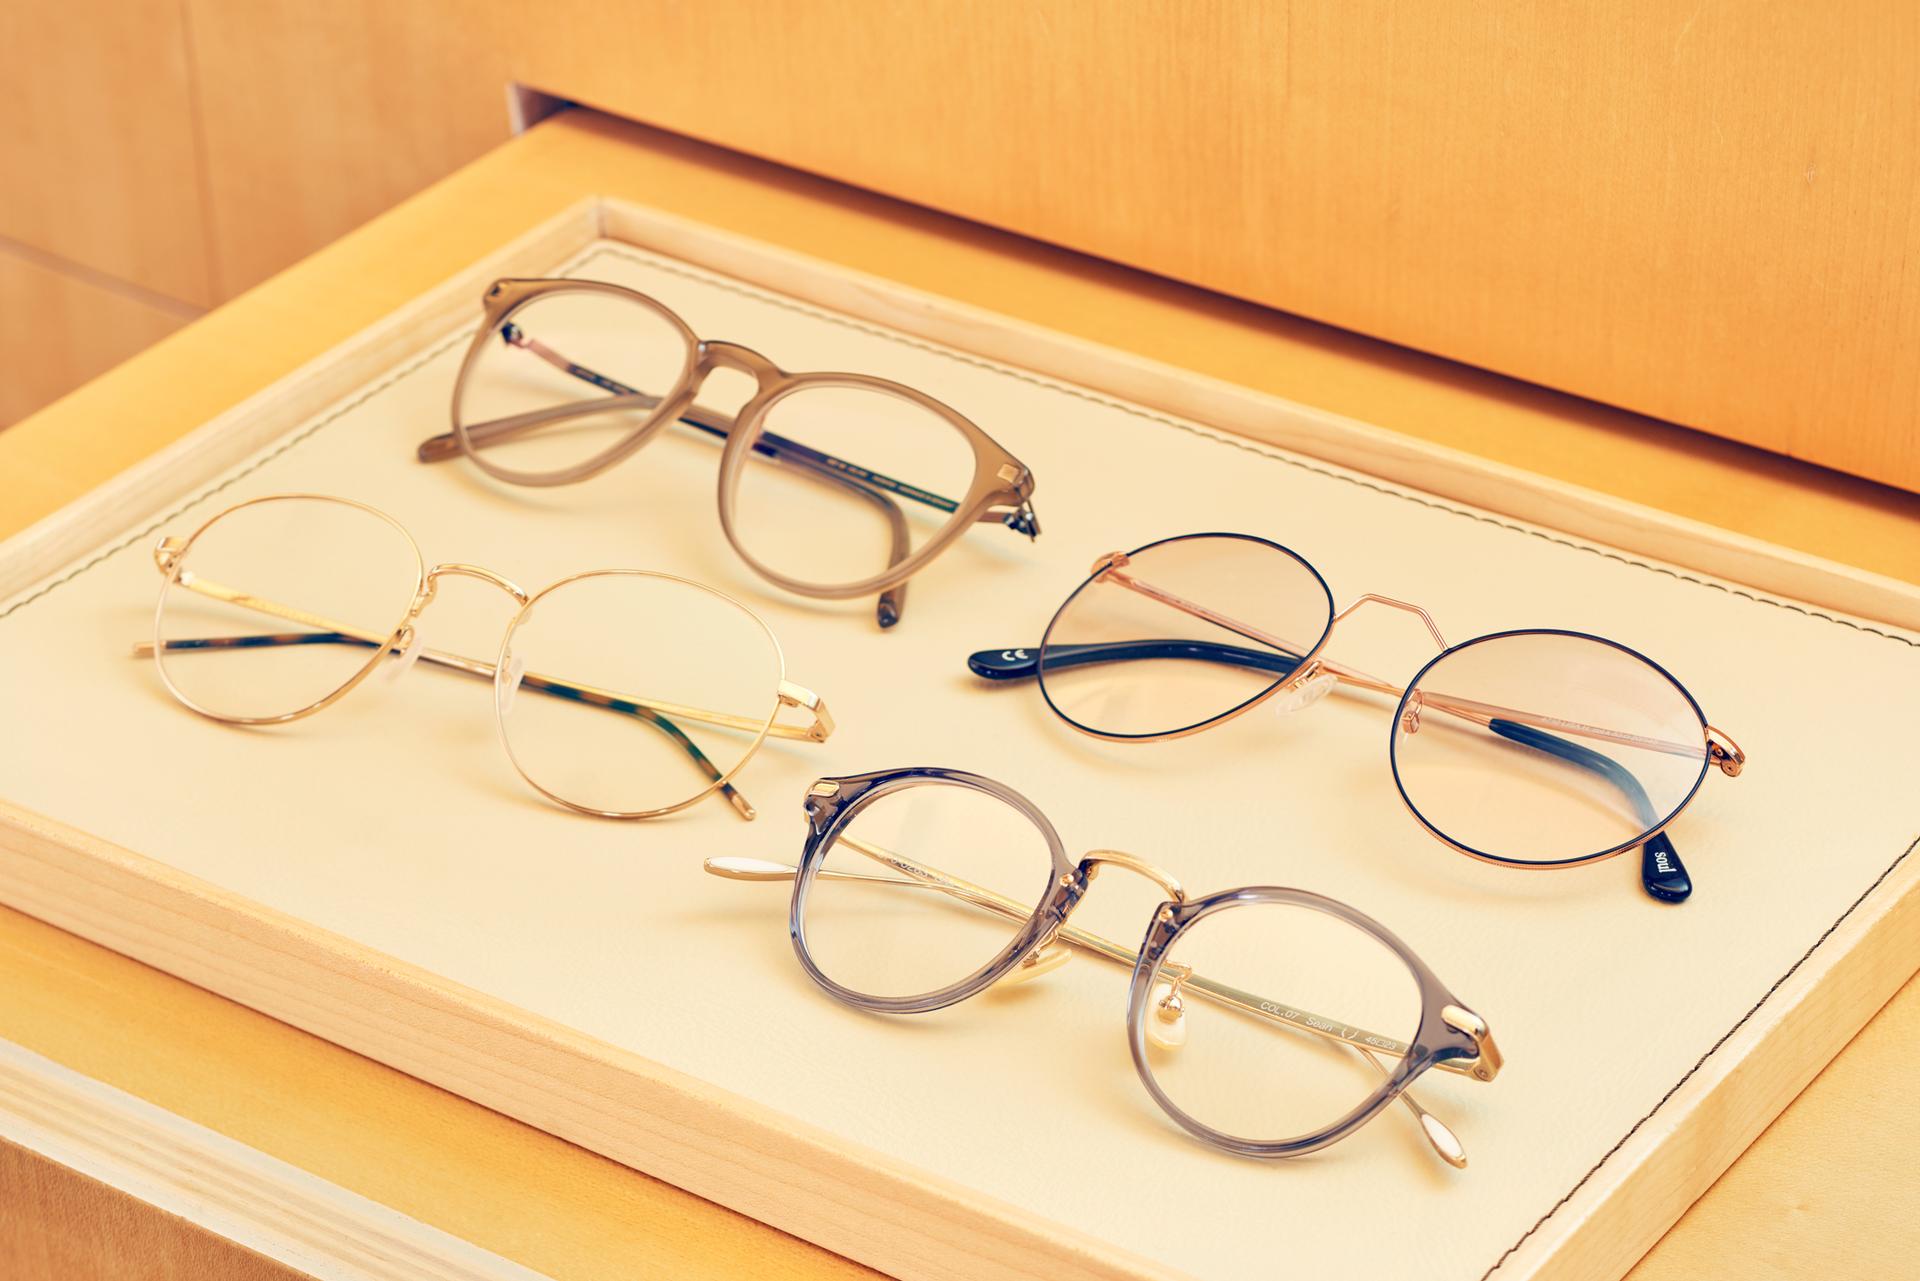 Minimalist and elegant. Find the Dior eyewear collection at Optik